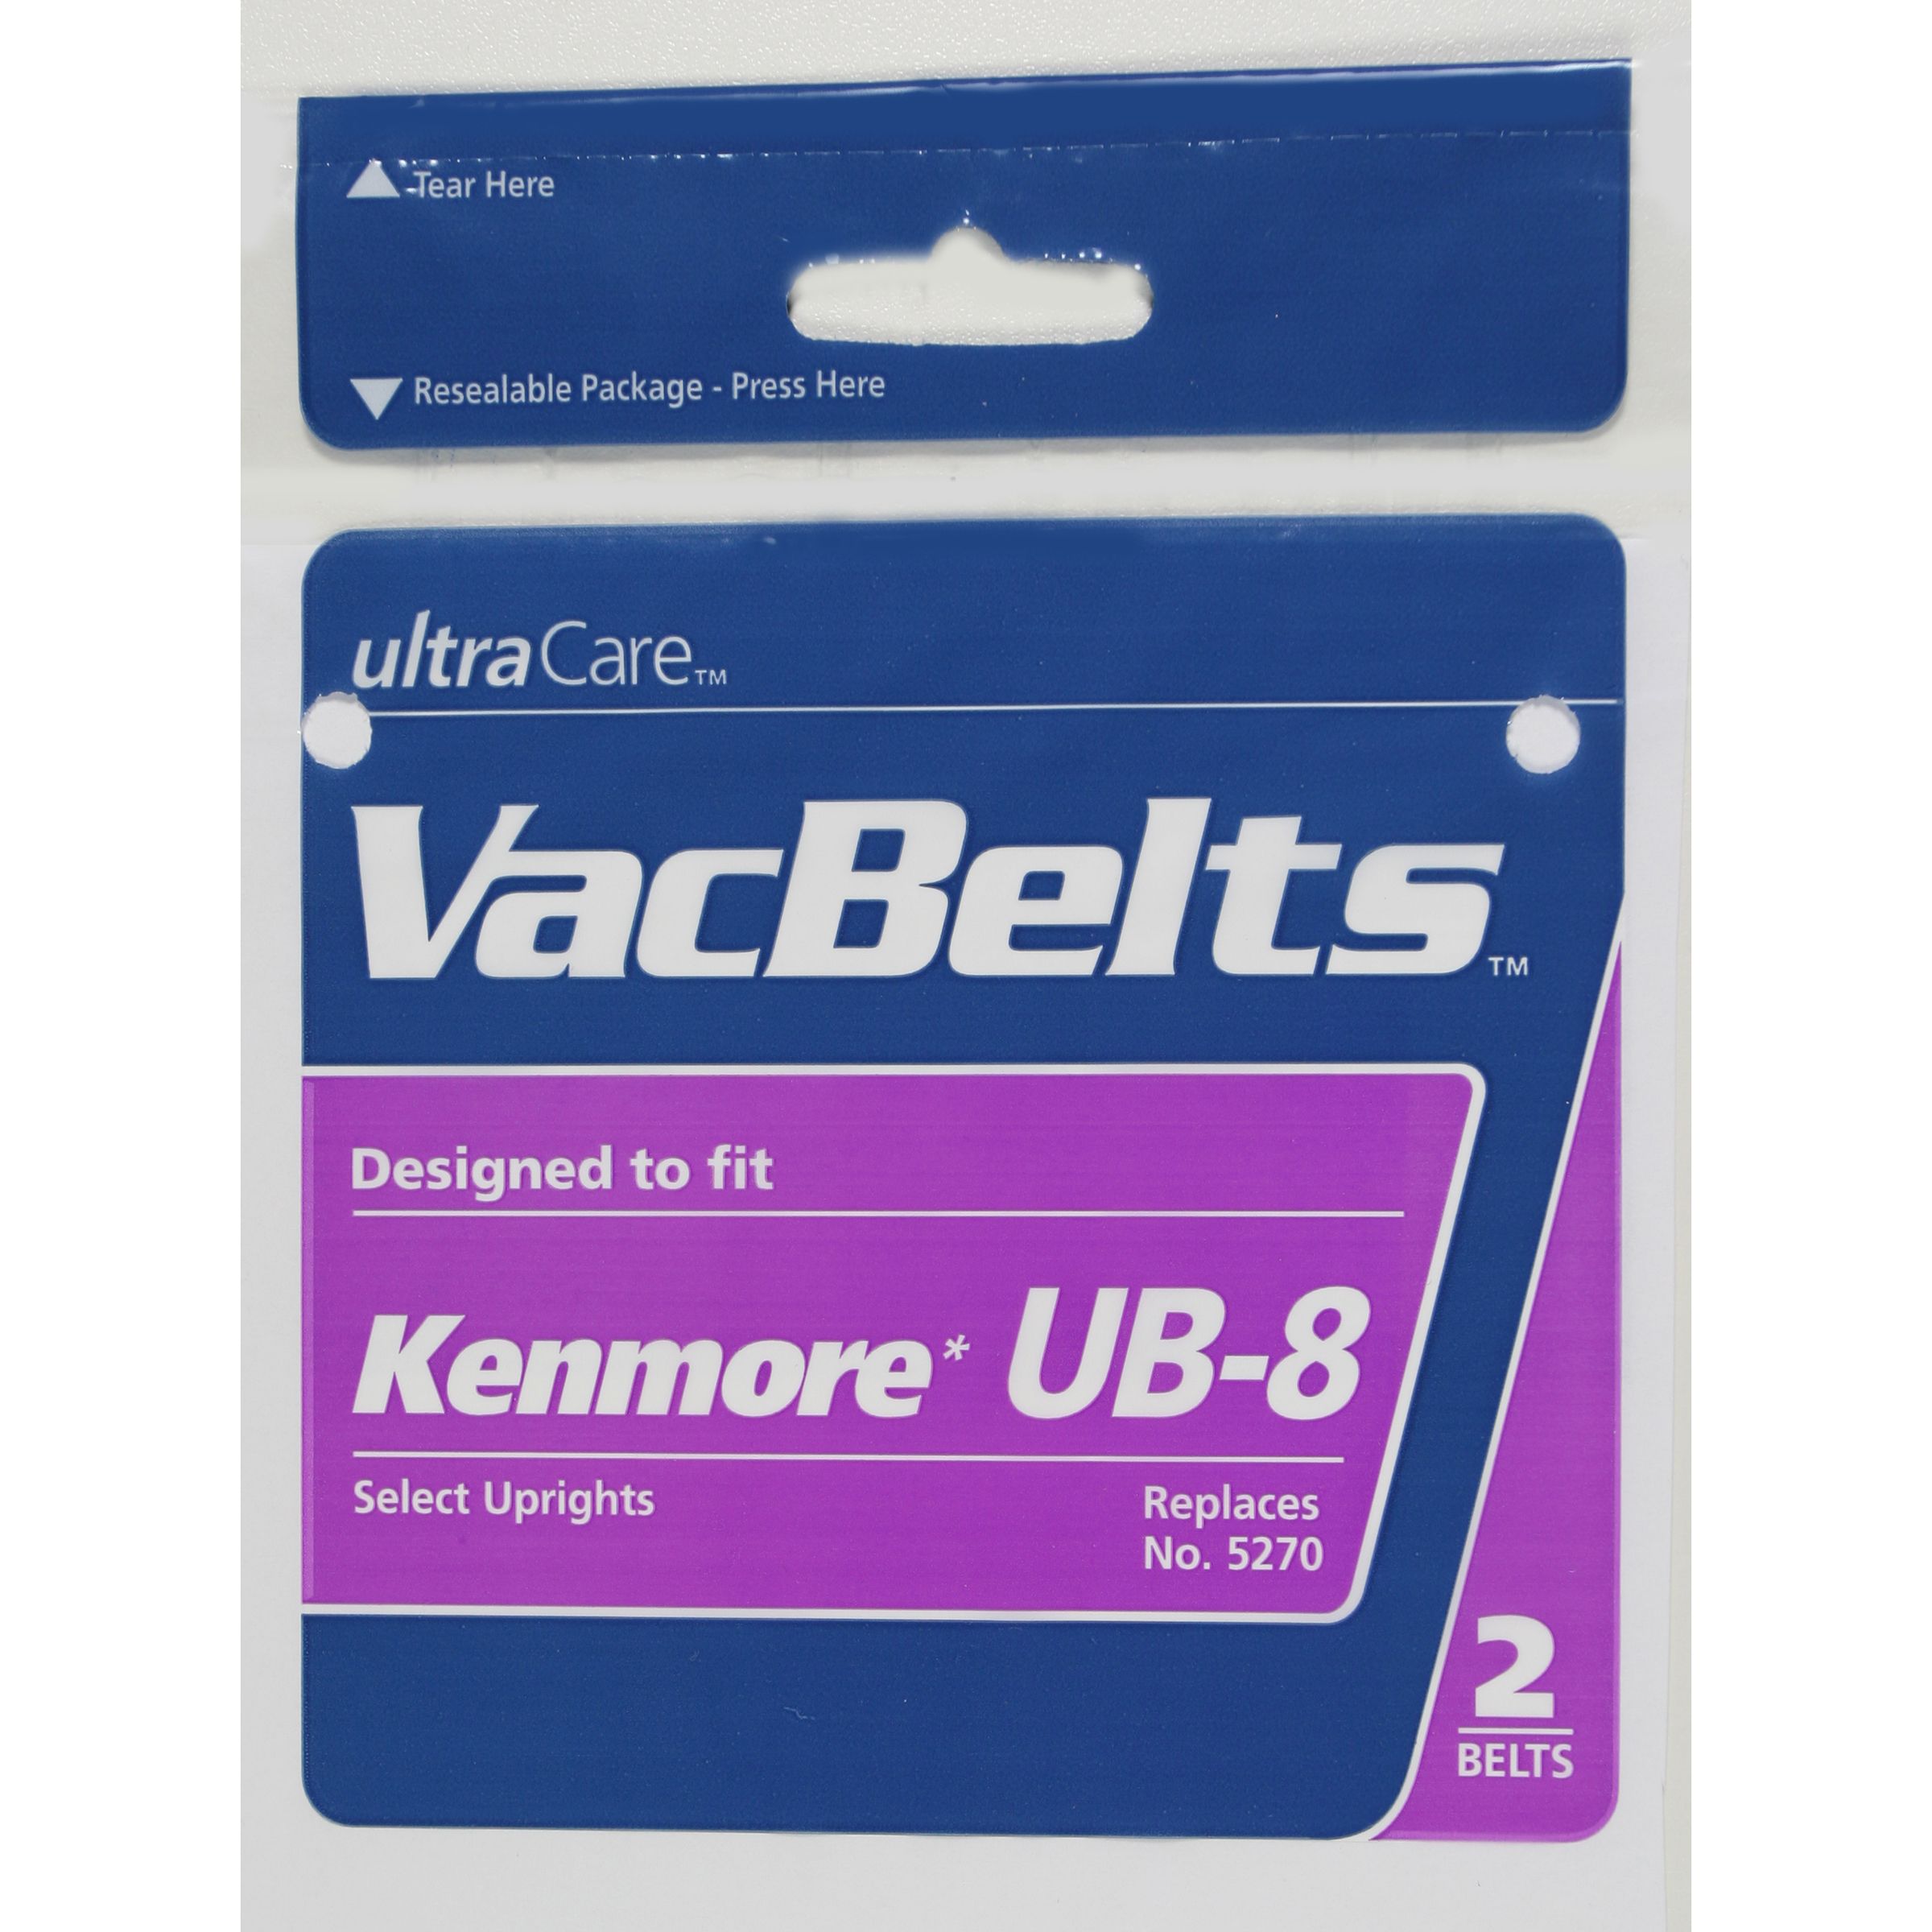 UltraCare 609986 Kenmore UB-8 Vacuum Belts